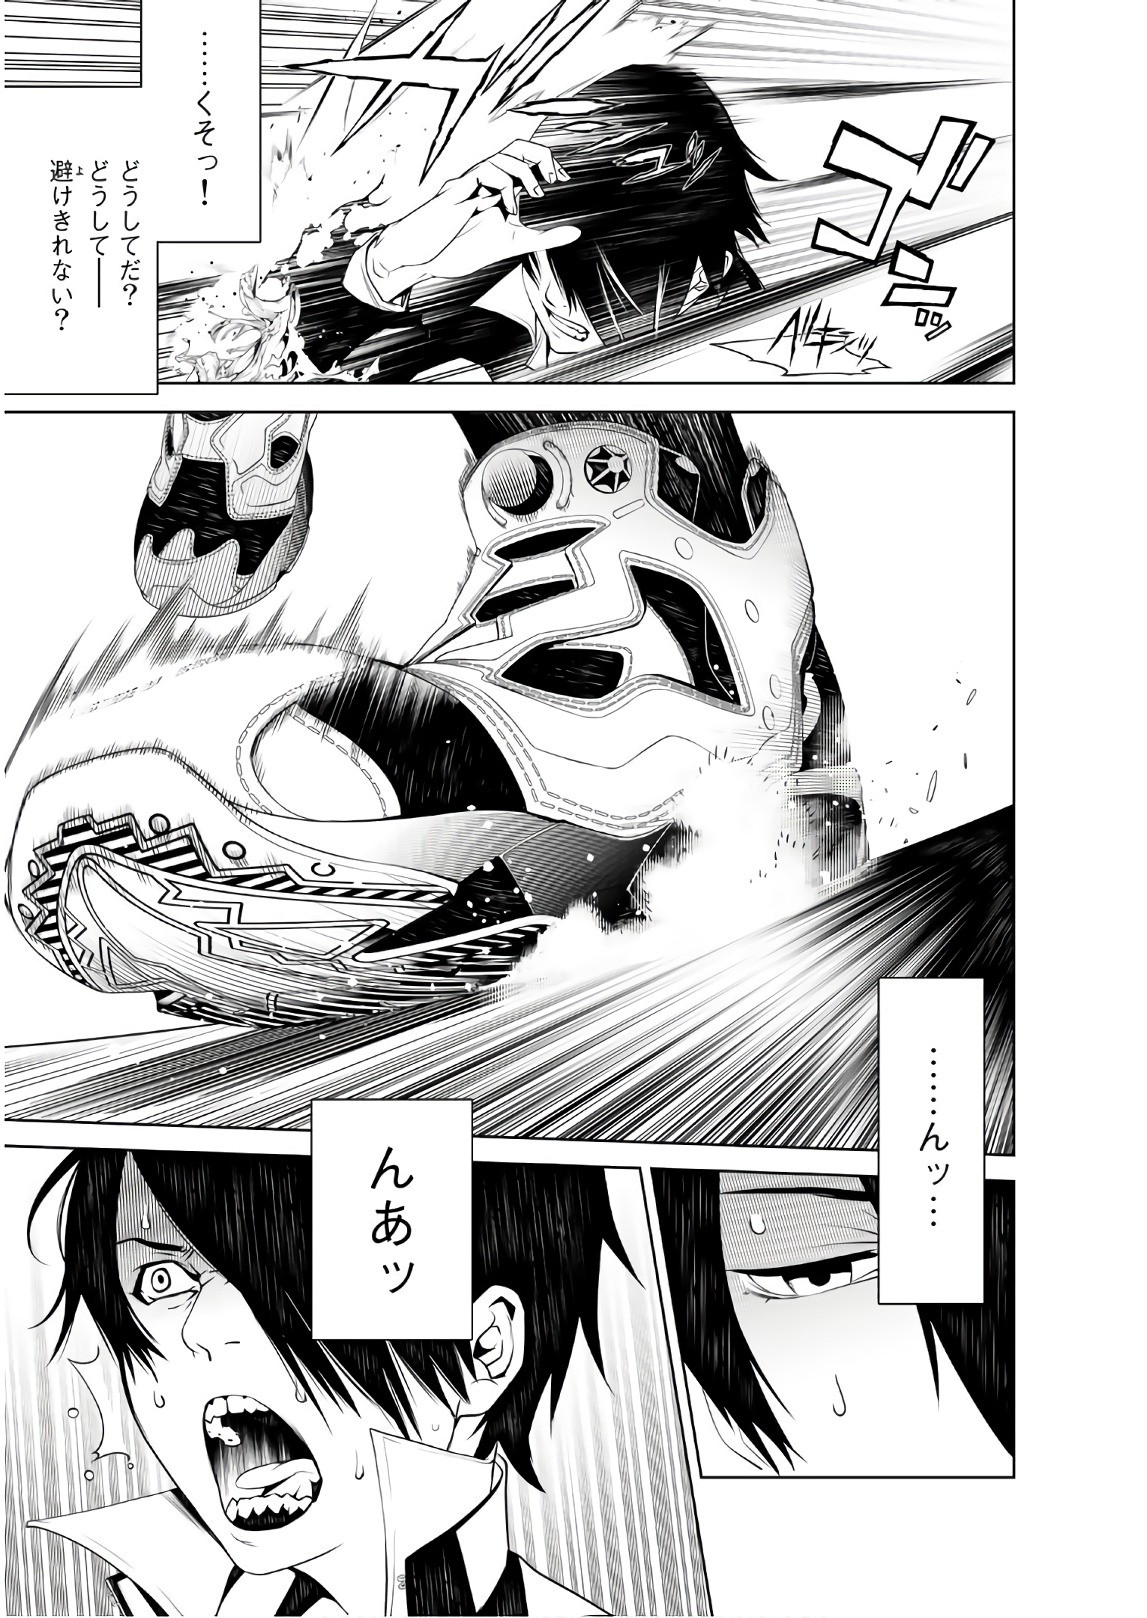 Bakemonogatari - Chapter 39 - Page 1